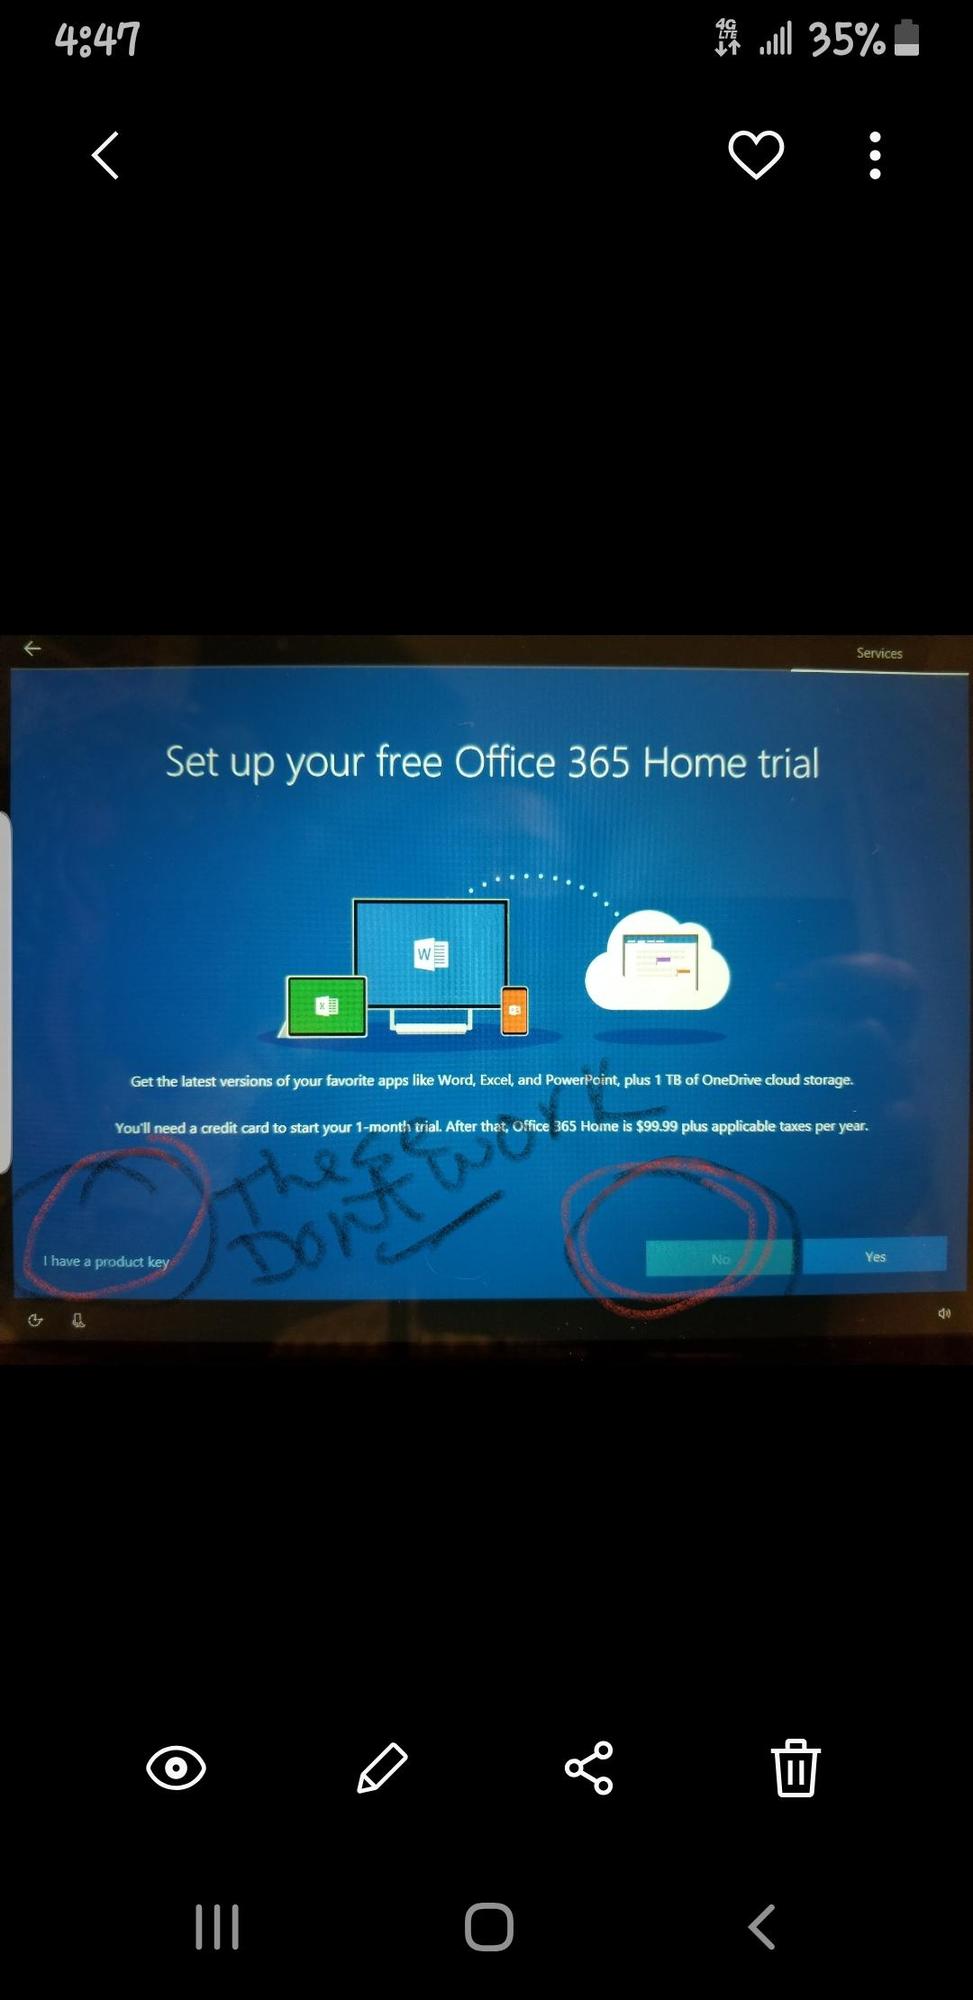 "The set up your free office 365 home trial" screen has stopped my reinstall of windows 10.... adf17da3-0013-49ee-b692-e629e164ac85?upload=true.jpg